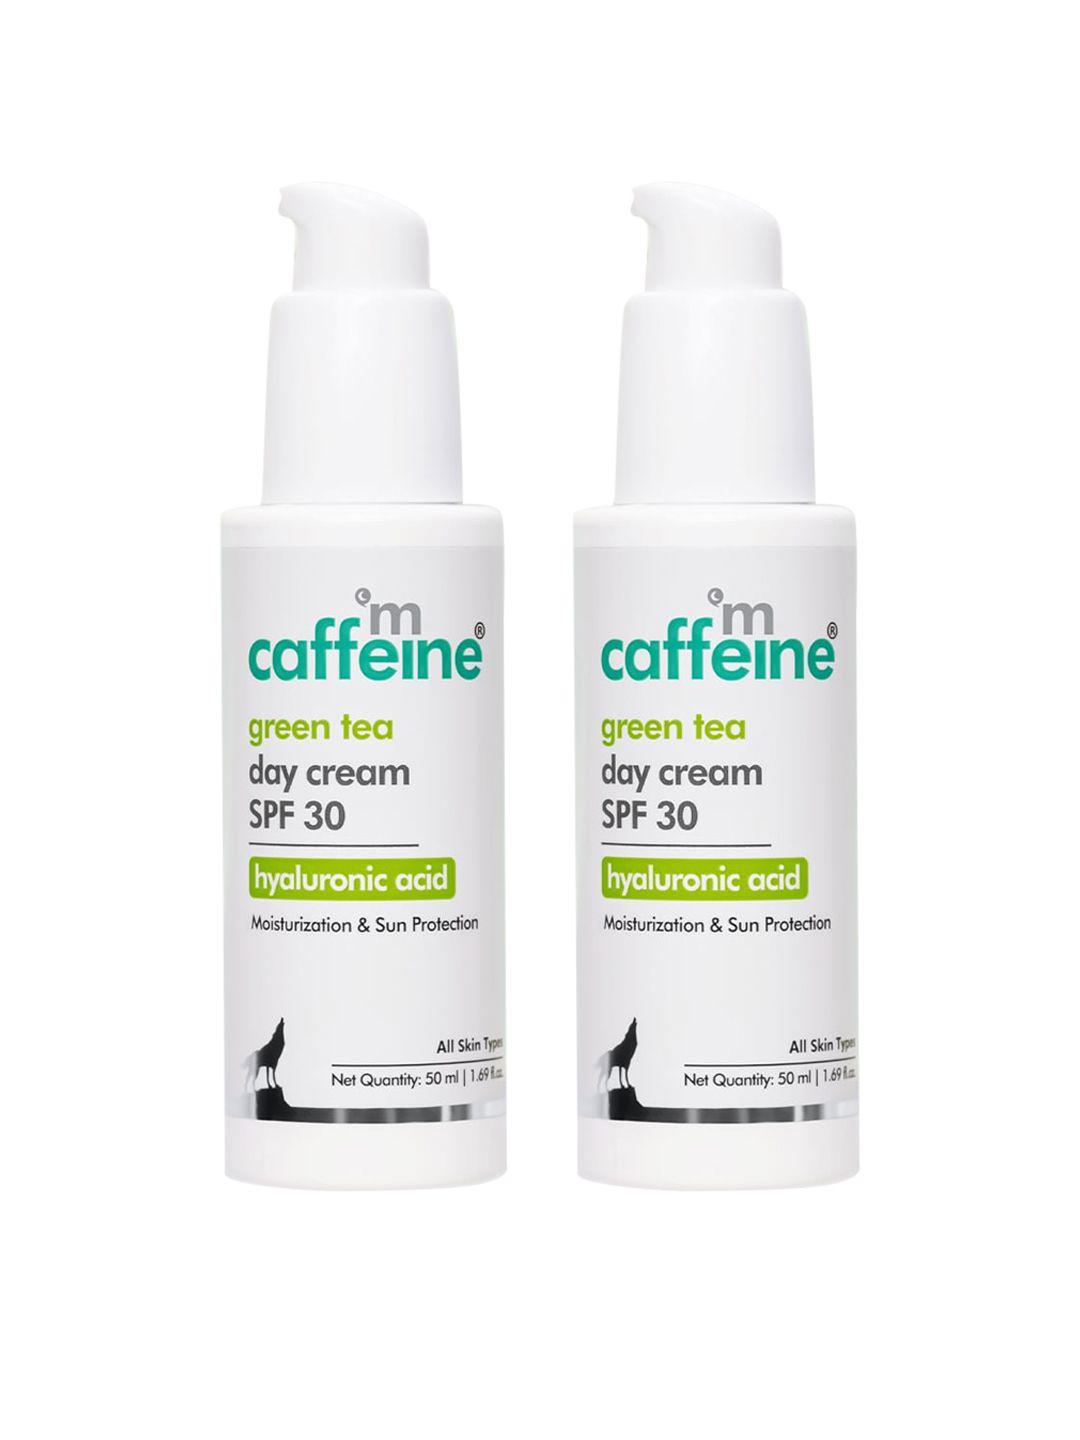 mcaffeine set of 2 green tea day cream spf30 with hyaluronic acid - 50ml each